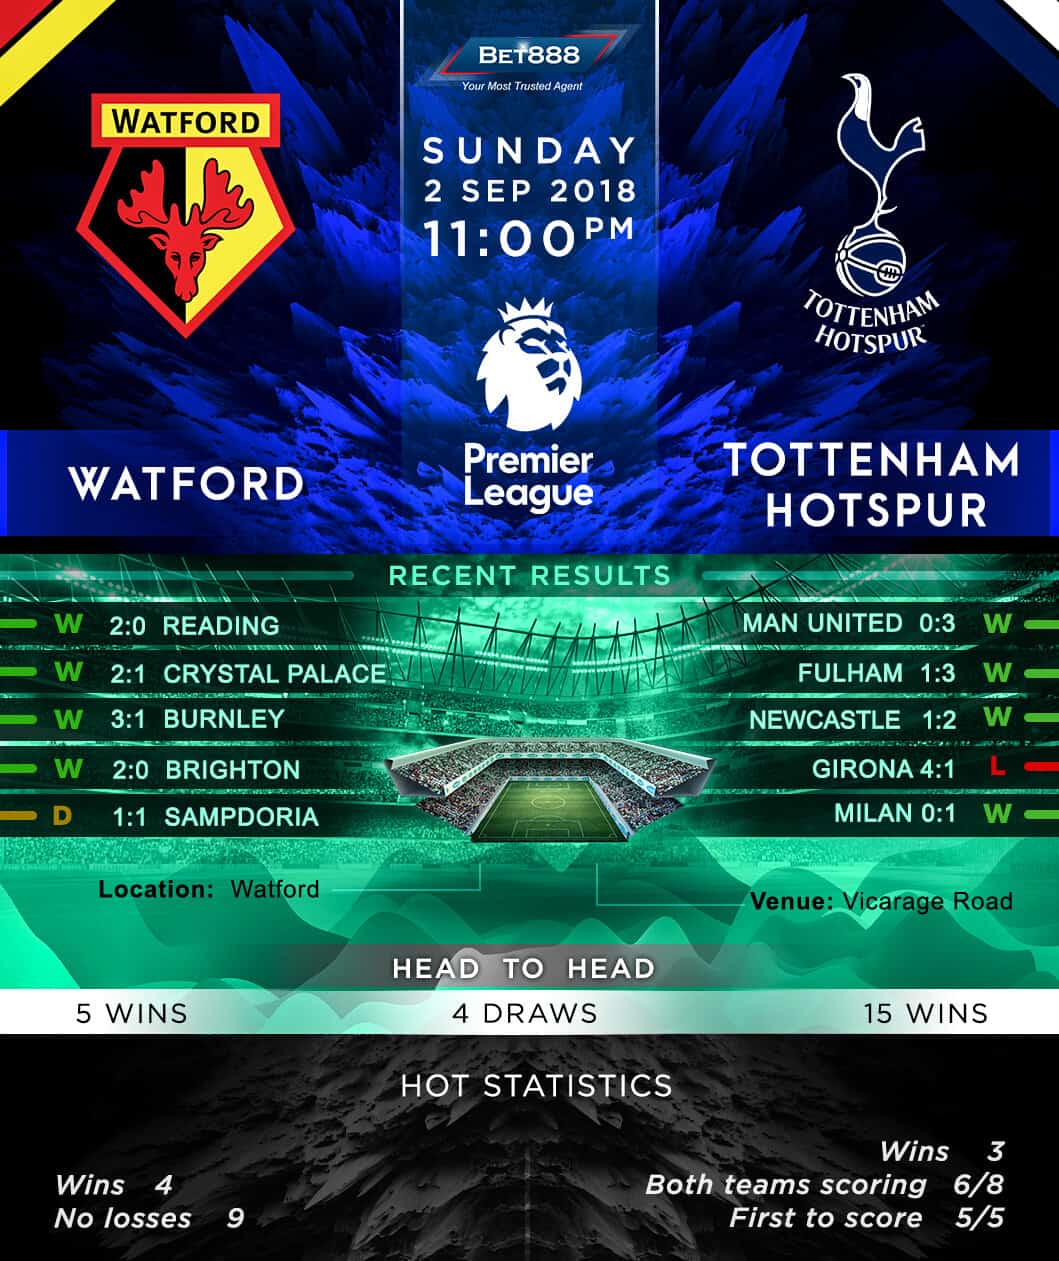 Watford vs Tottenham Hotspur 02/09/18